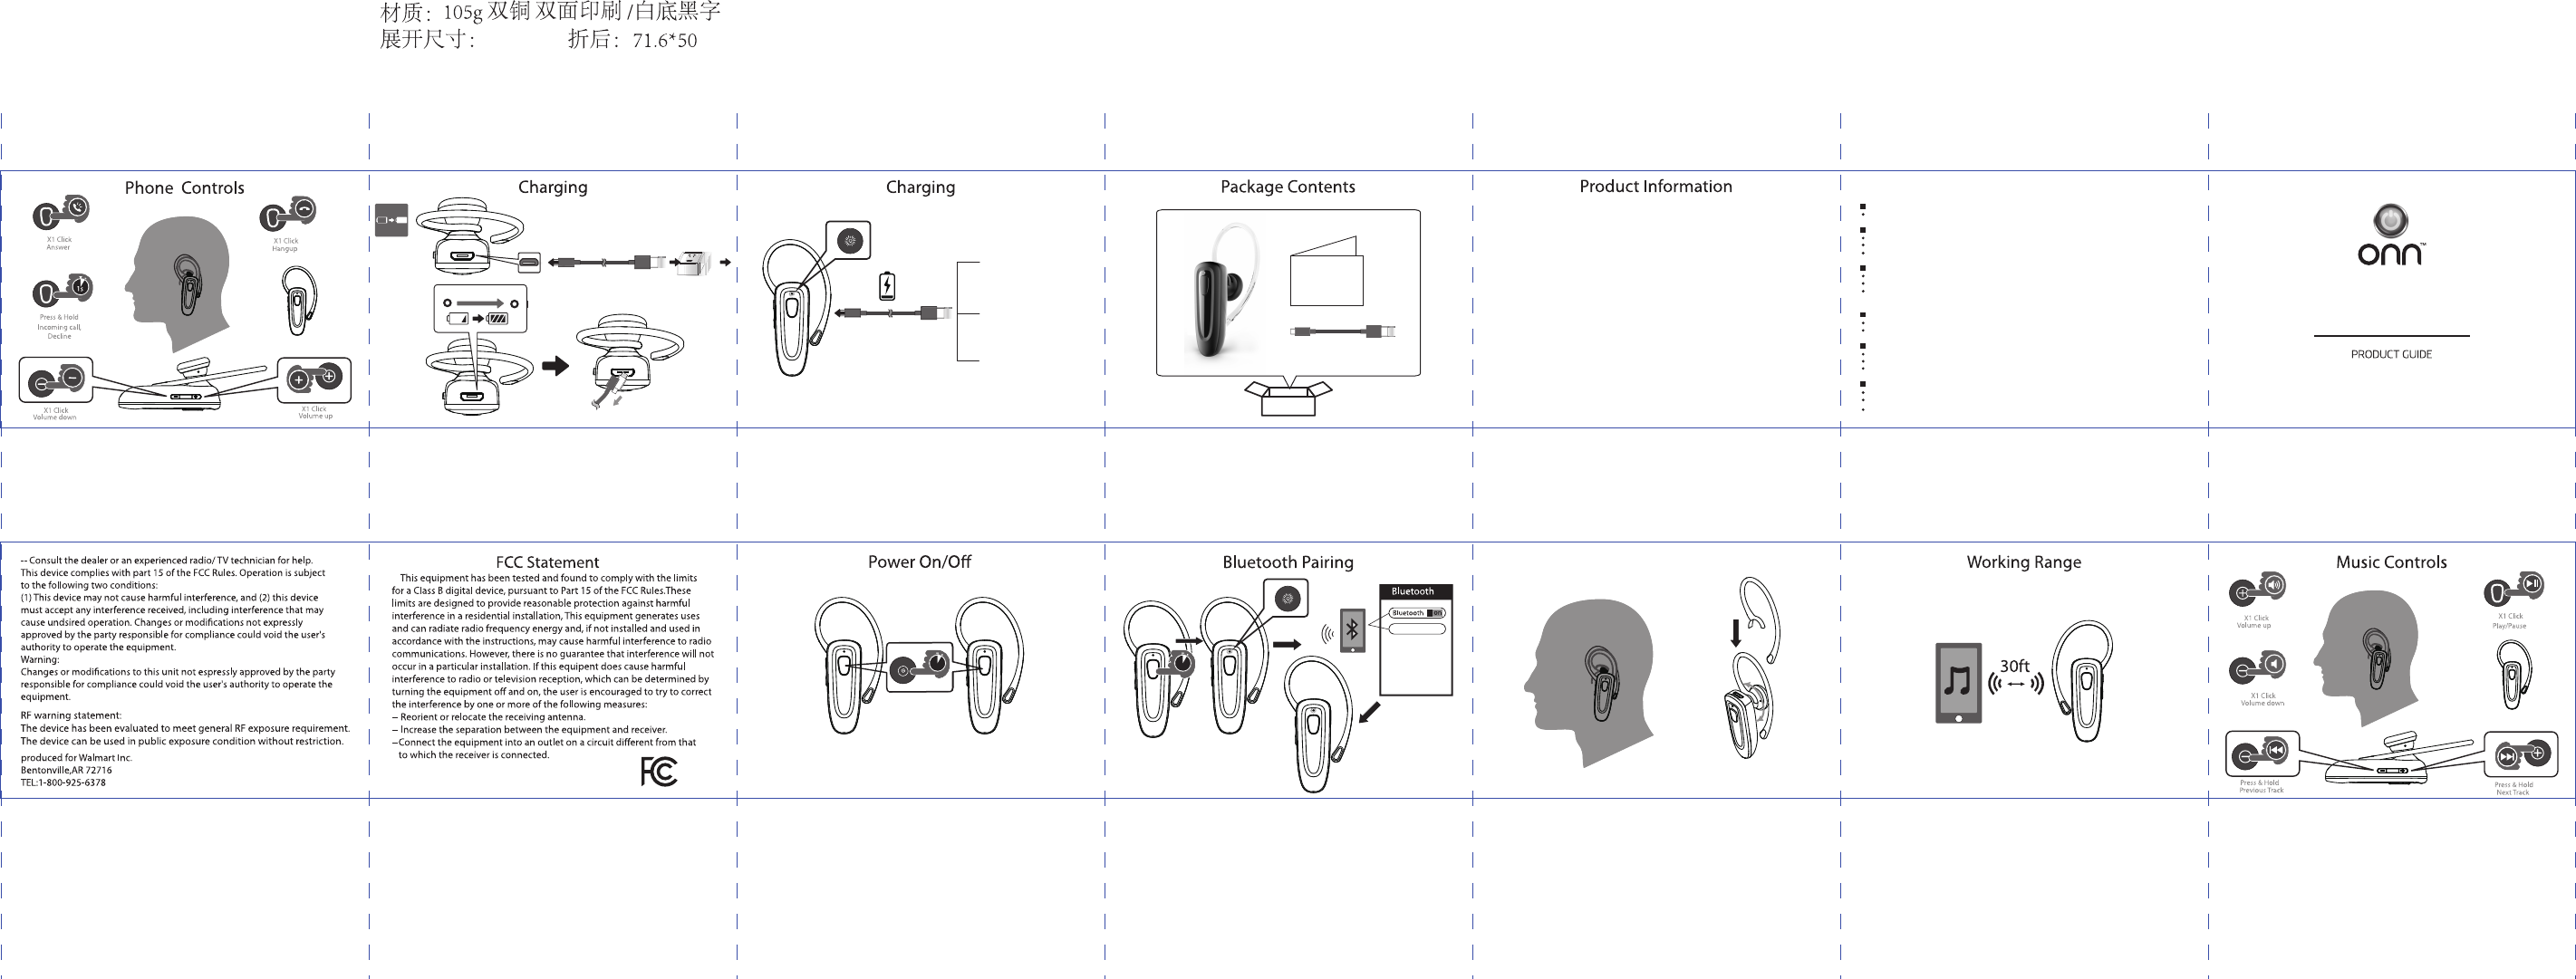 Topway Em Enterprise Onb001 Bluetooth Headset With Built In Mic User Manual